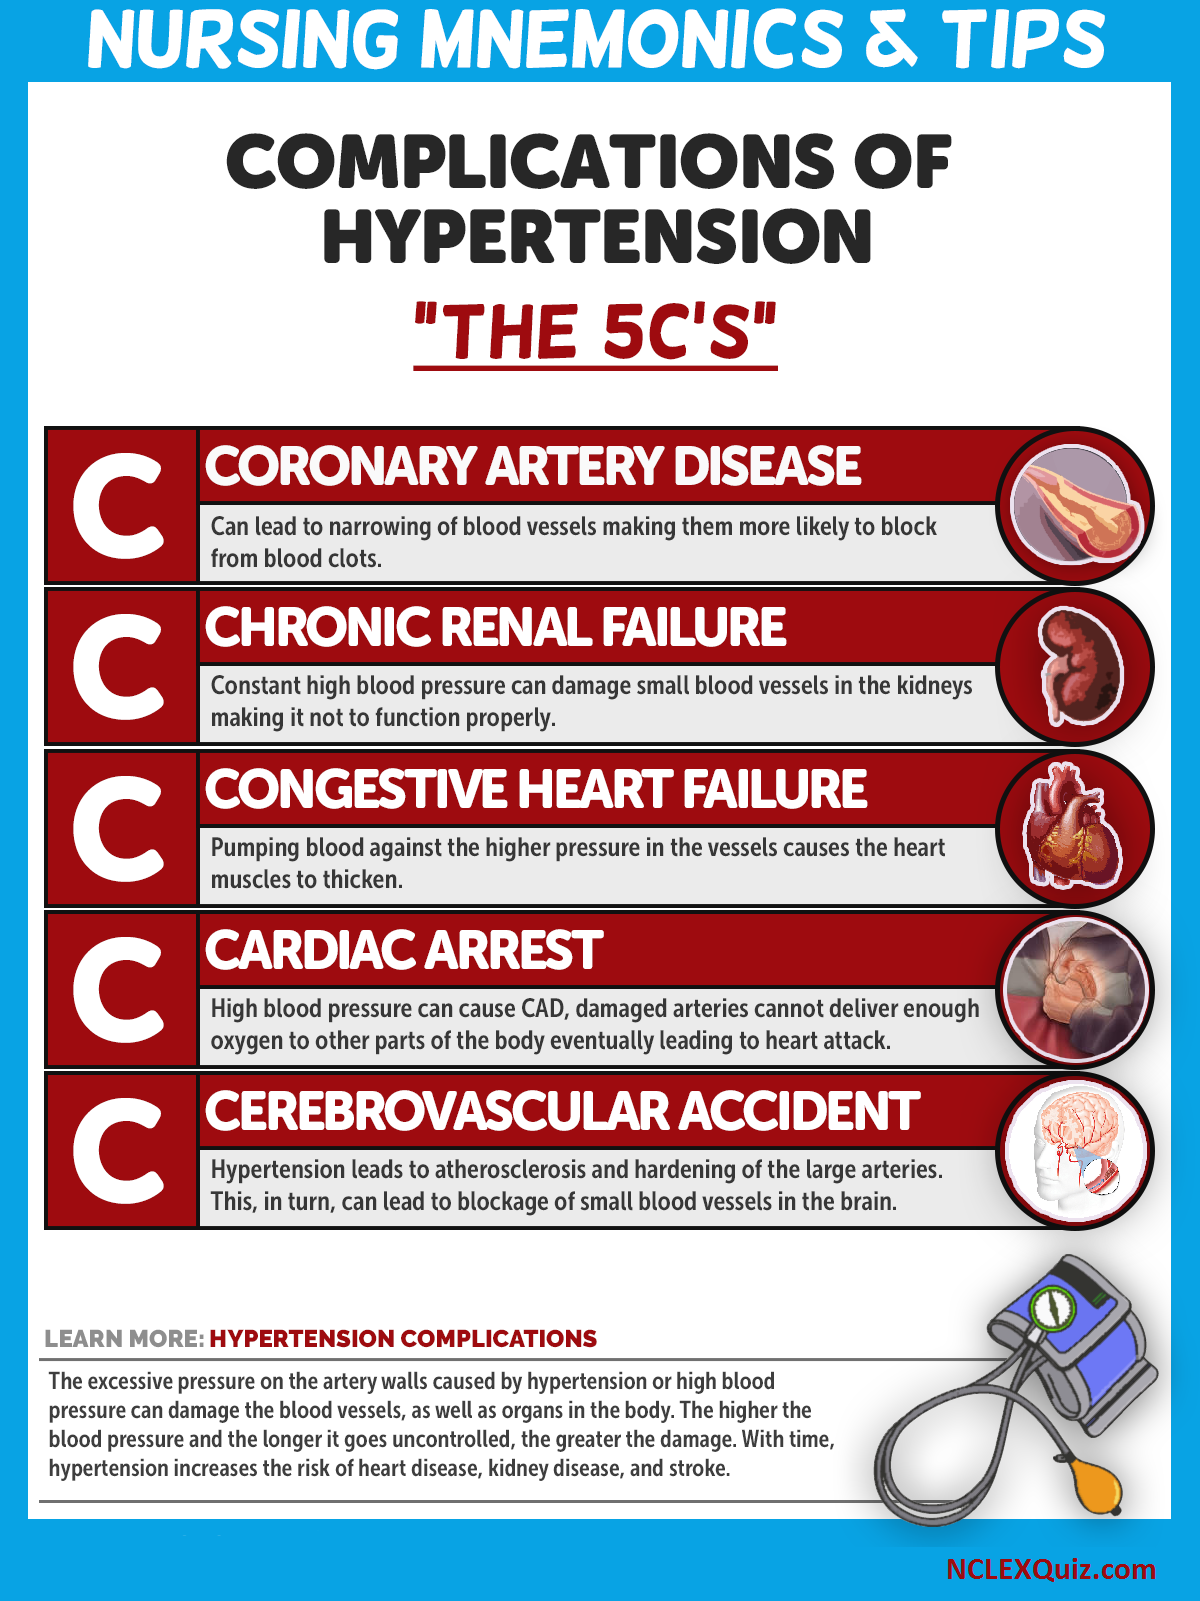 Nursing Mnemonics: “5 C’s of Hypertension Complications”